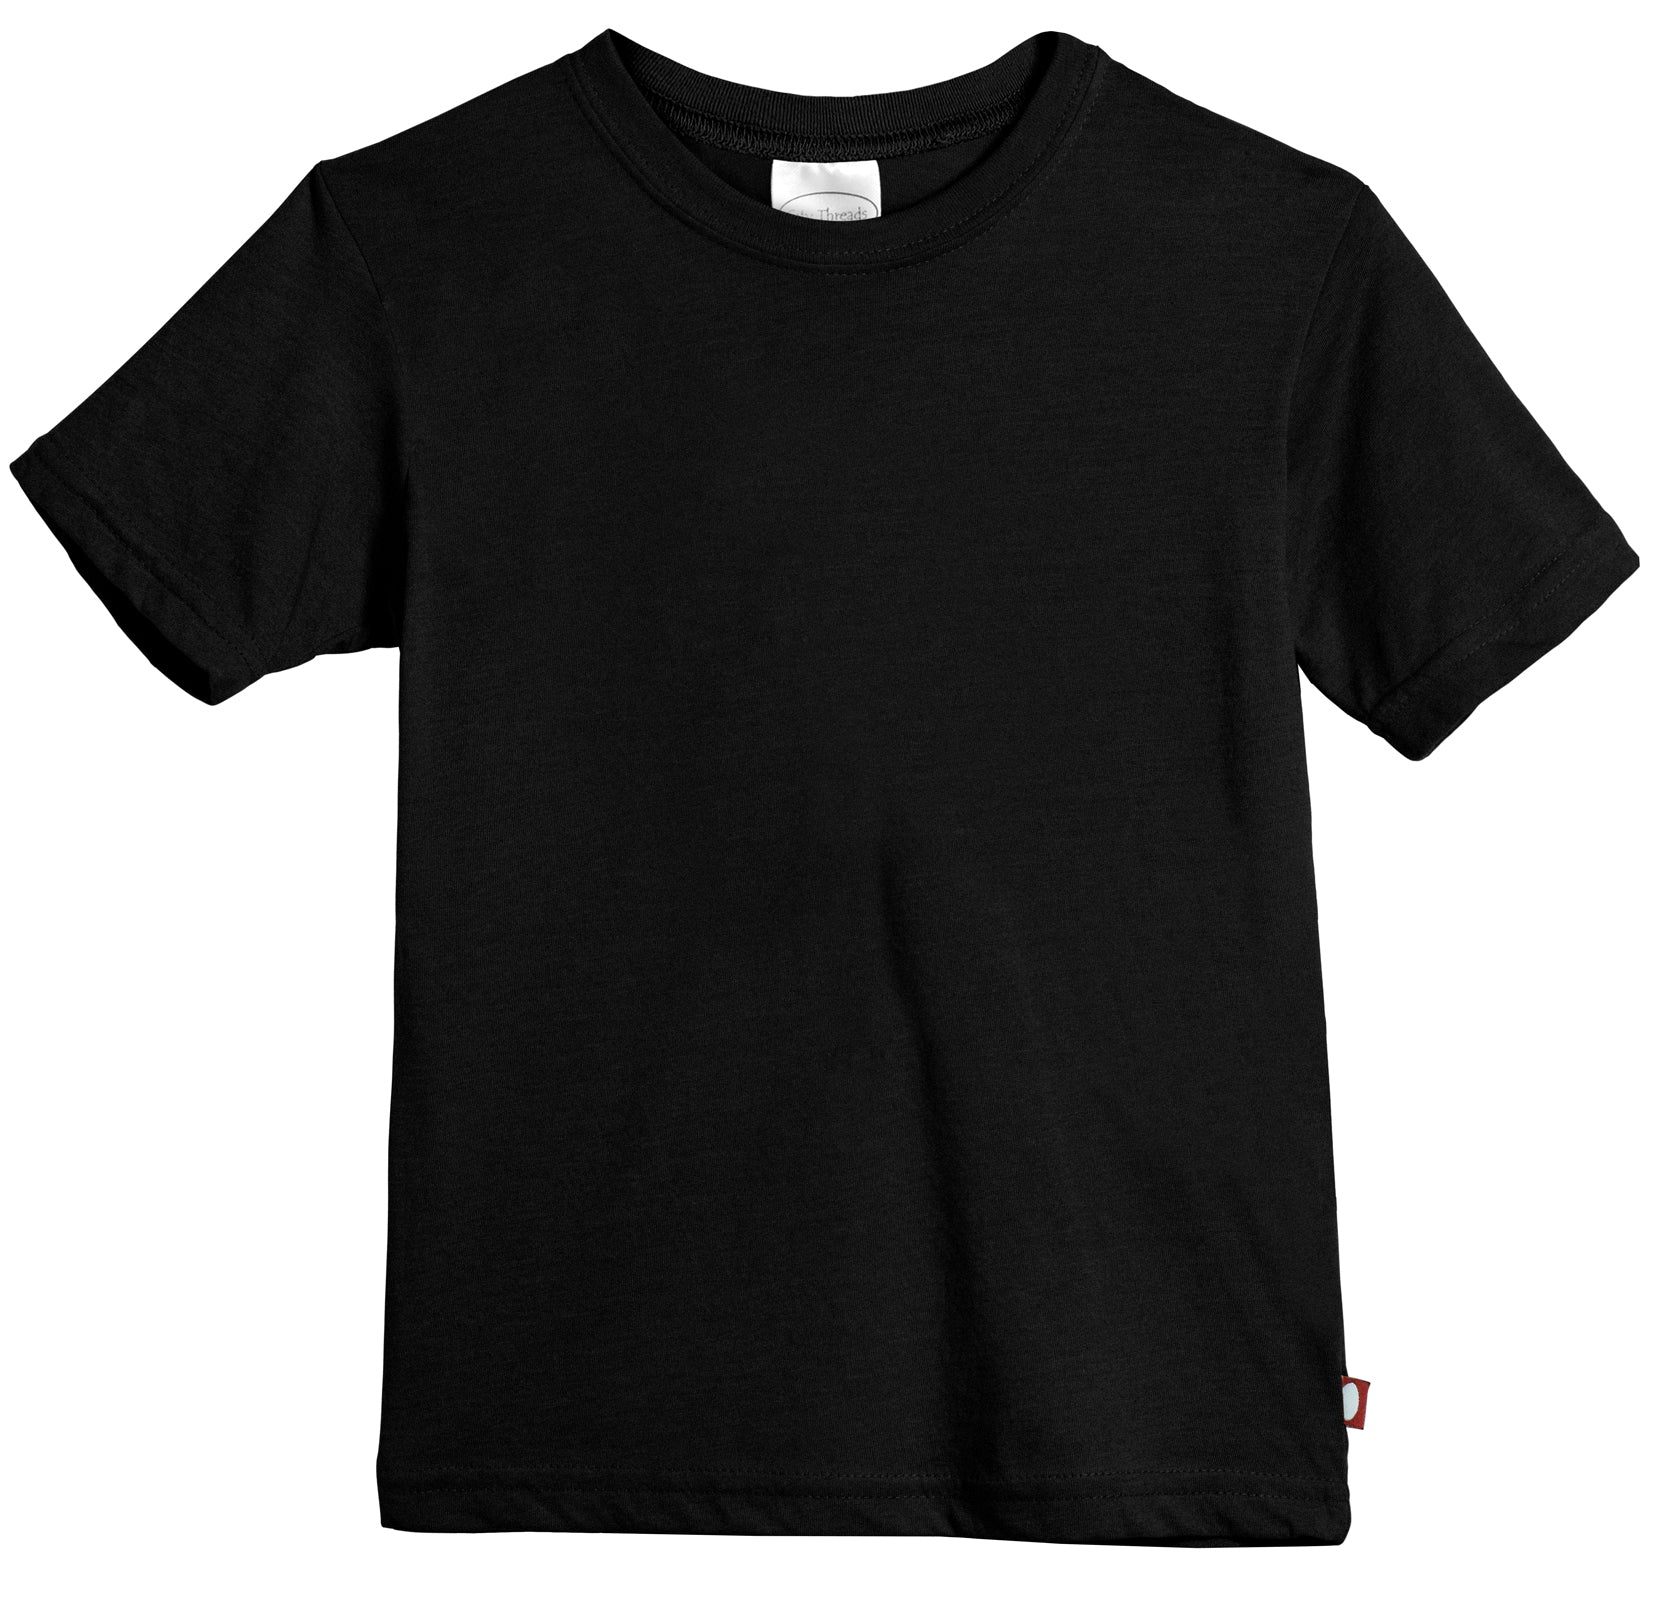 Kid's T-Shirt Black Cotton Jersey